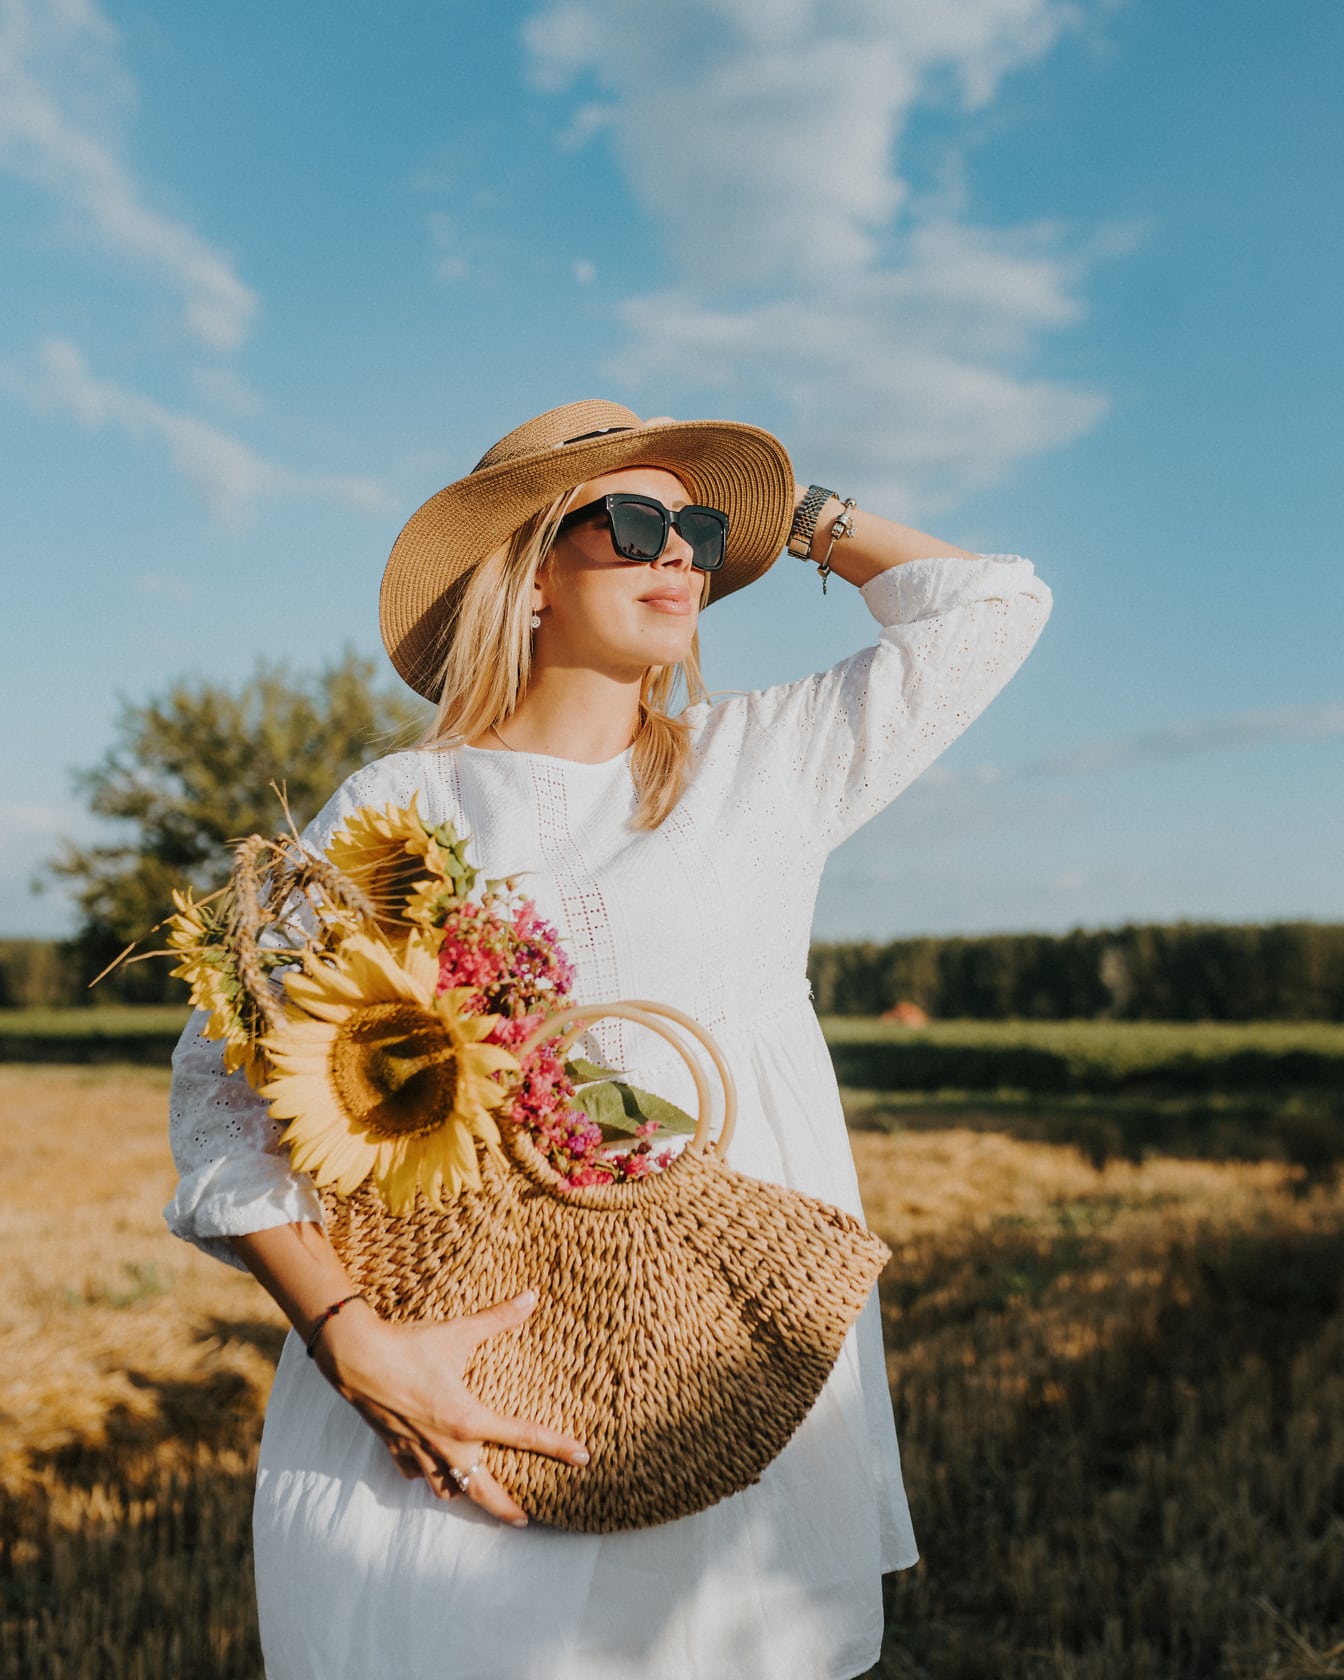 Potret cowgirl cantik memukau menikmati berjemur di lapangan dengan gaun putih dan topi jerami sambil memegang keranjang anyaman dengan bunga matahari